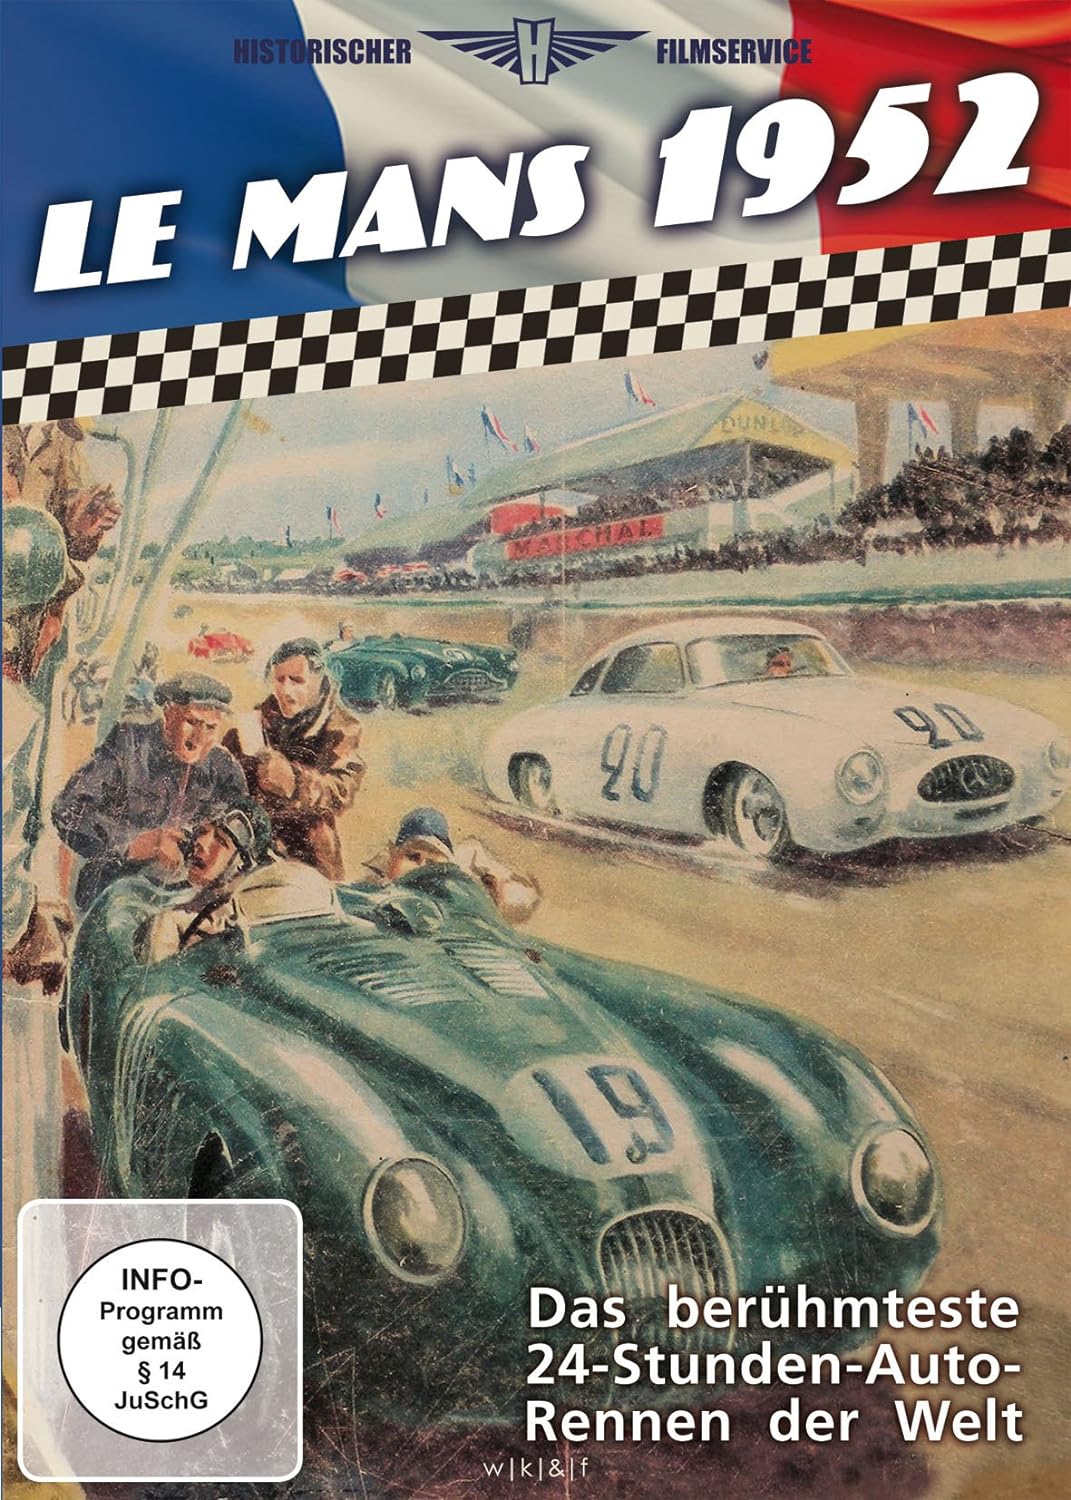 Motorsport - Le Mans 1952